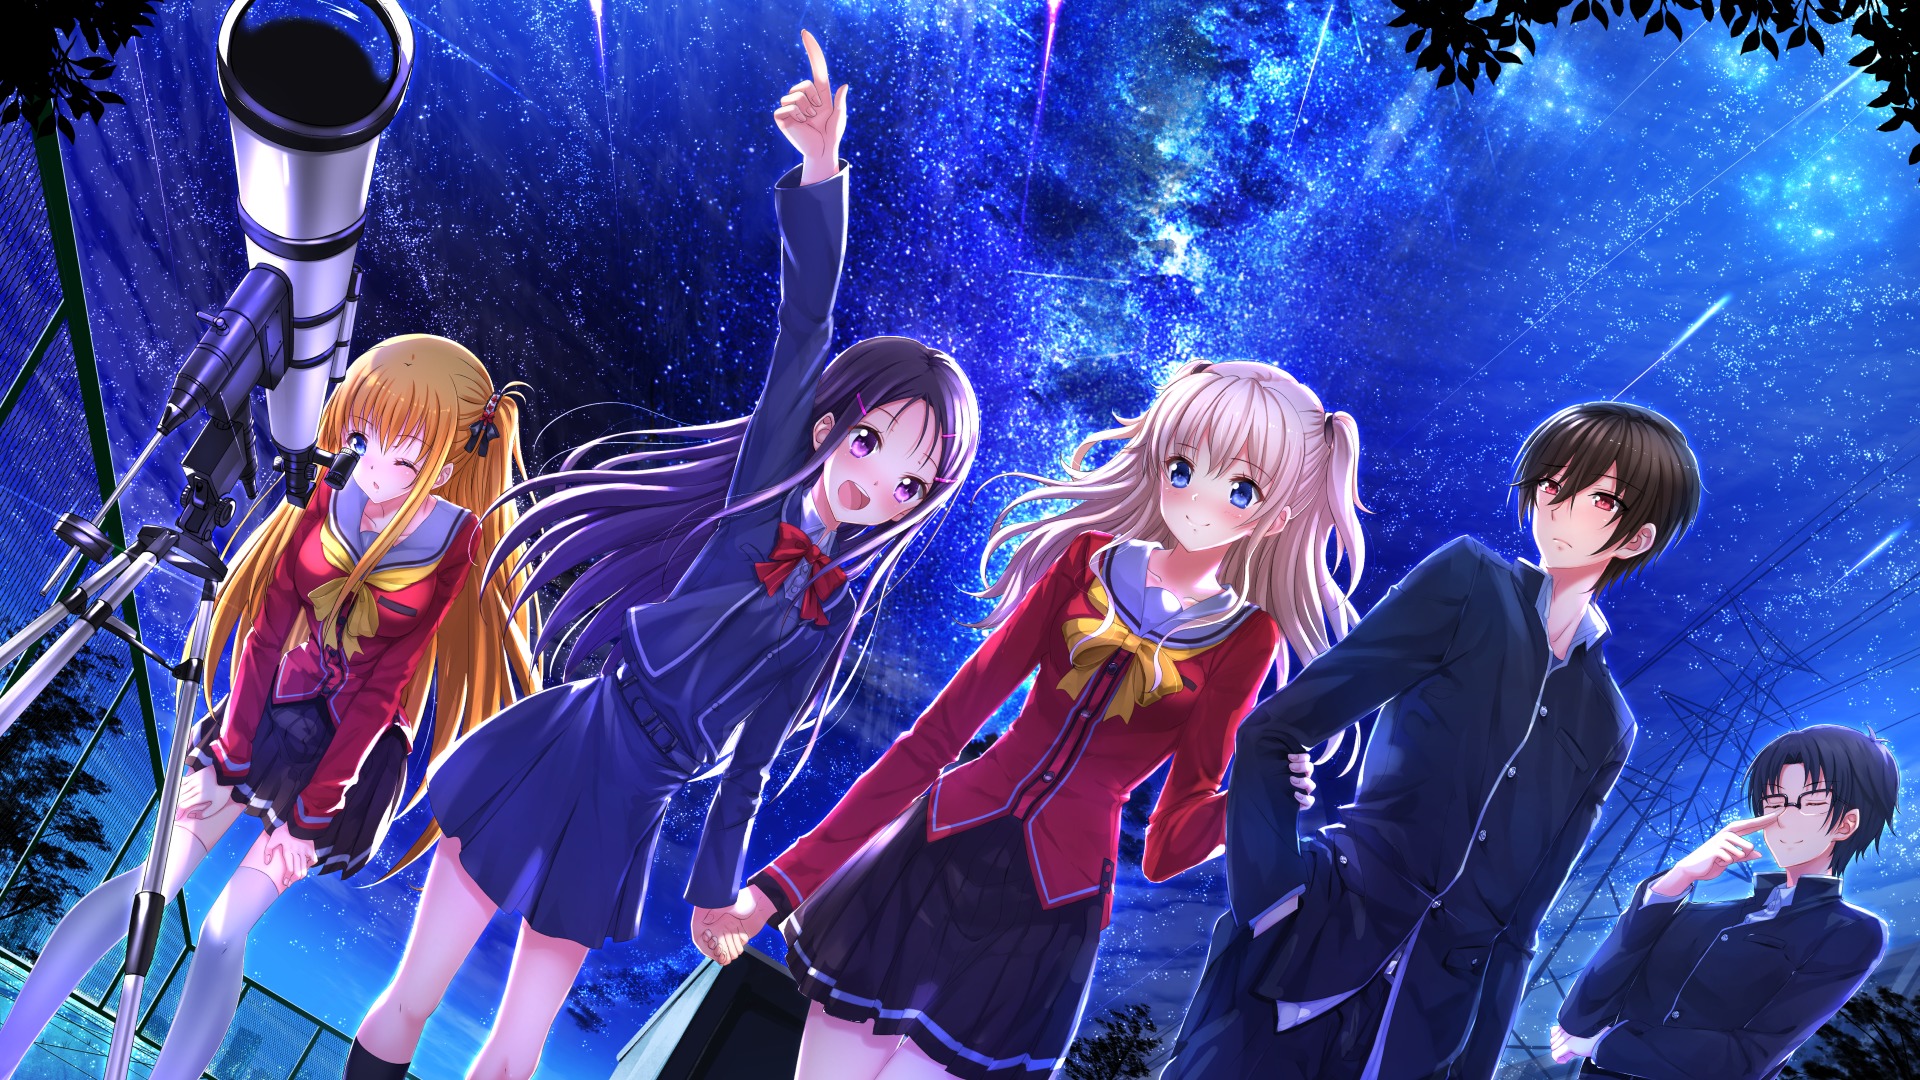 Charlotte (Anime) Main Members by Swordsouls